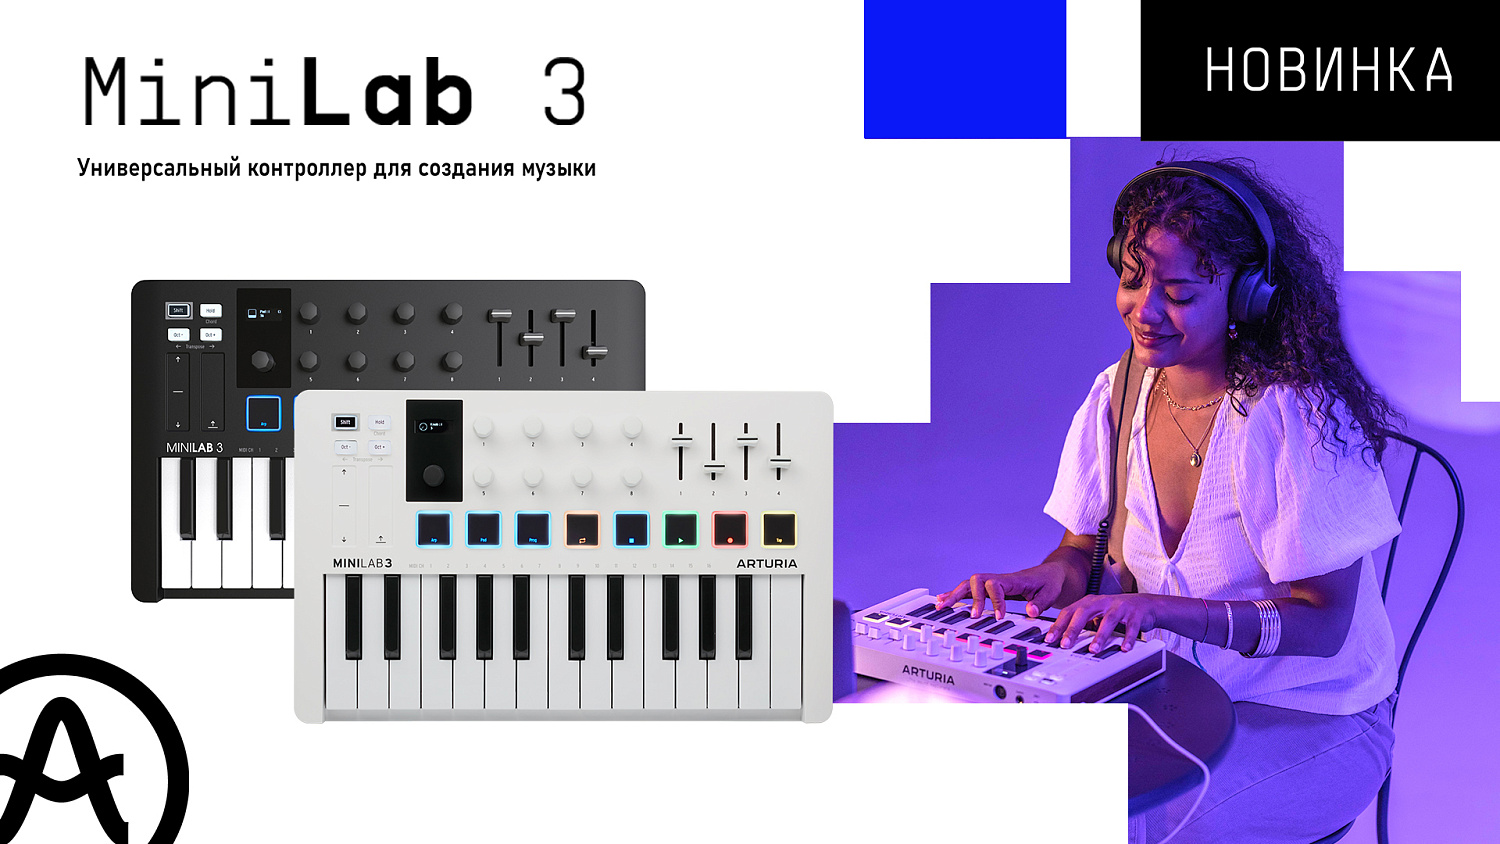 Arturia | MiniLab 3 — MIDI-контроллер нового поколения